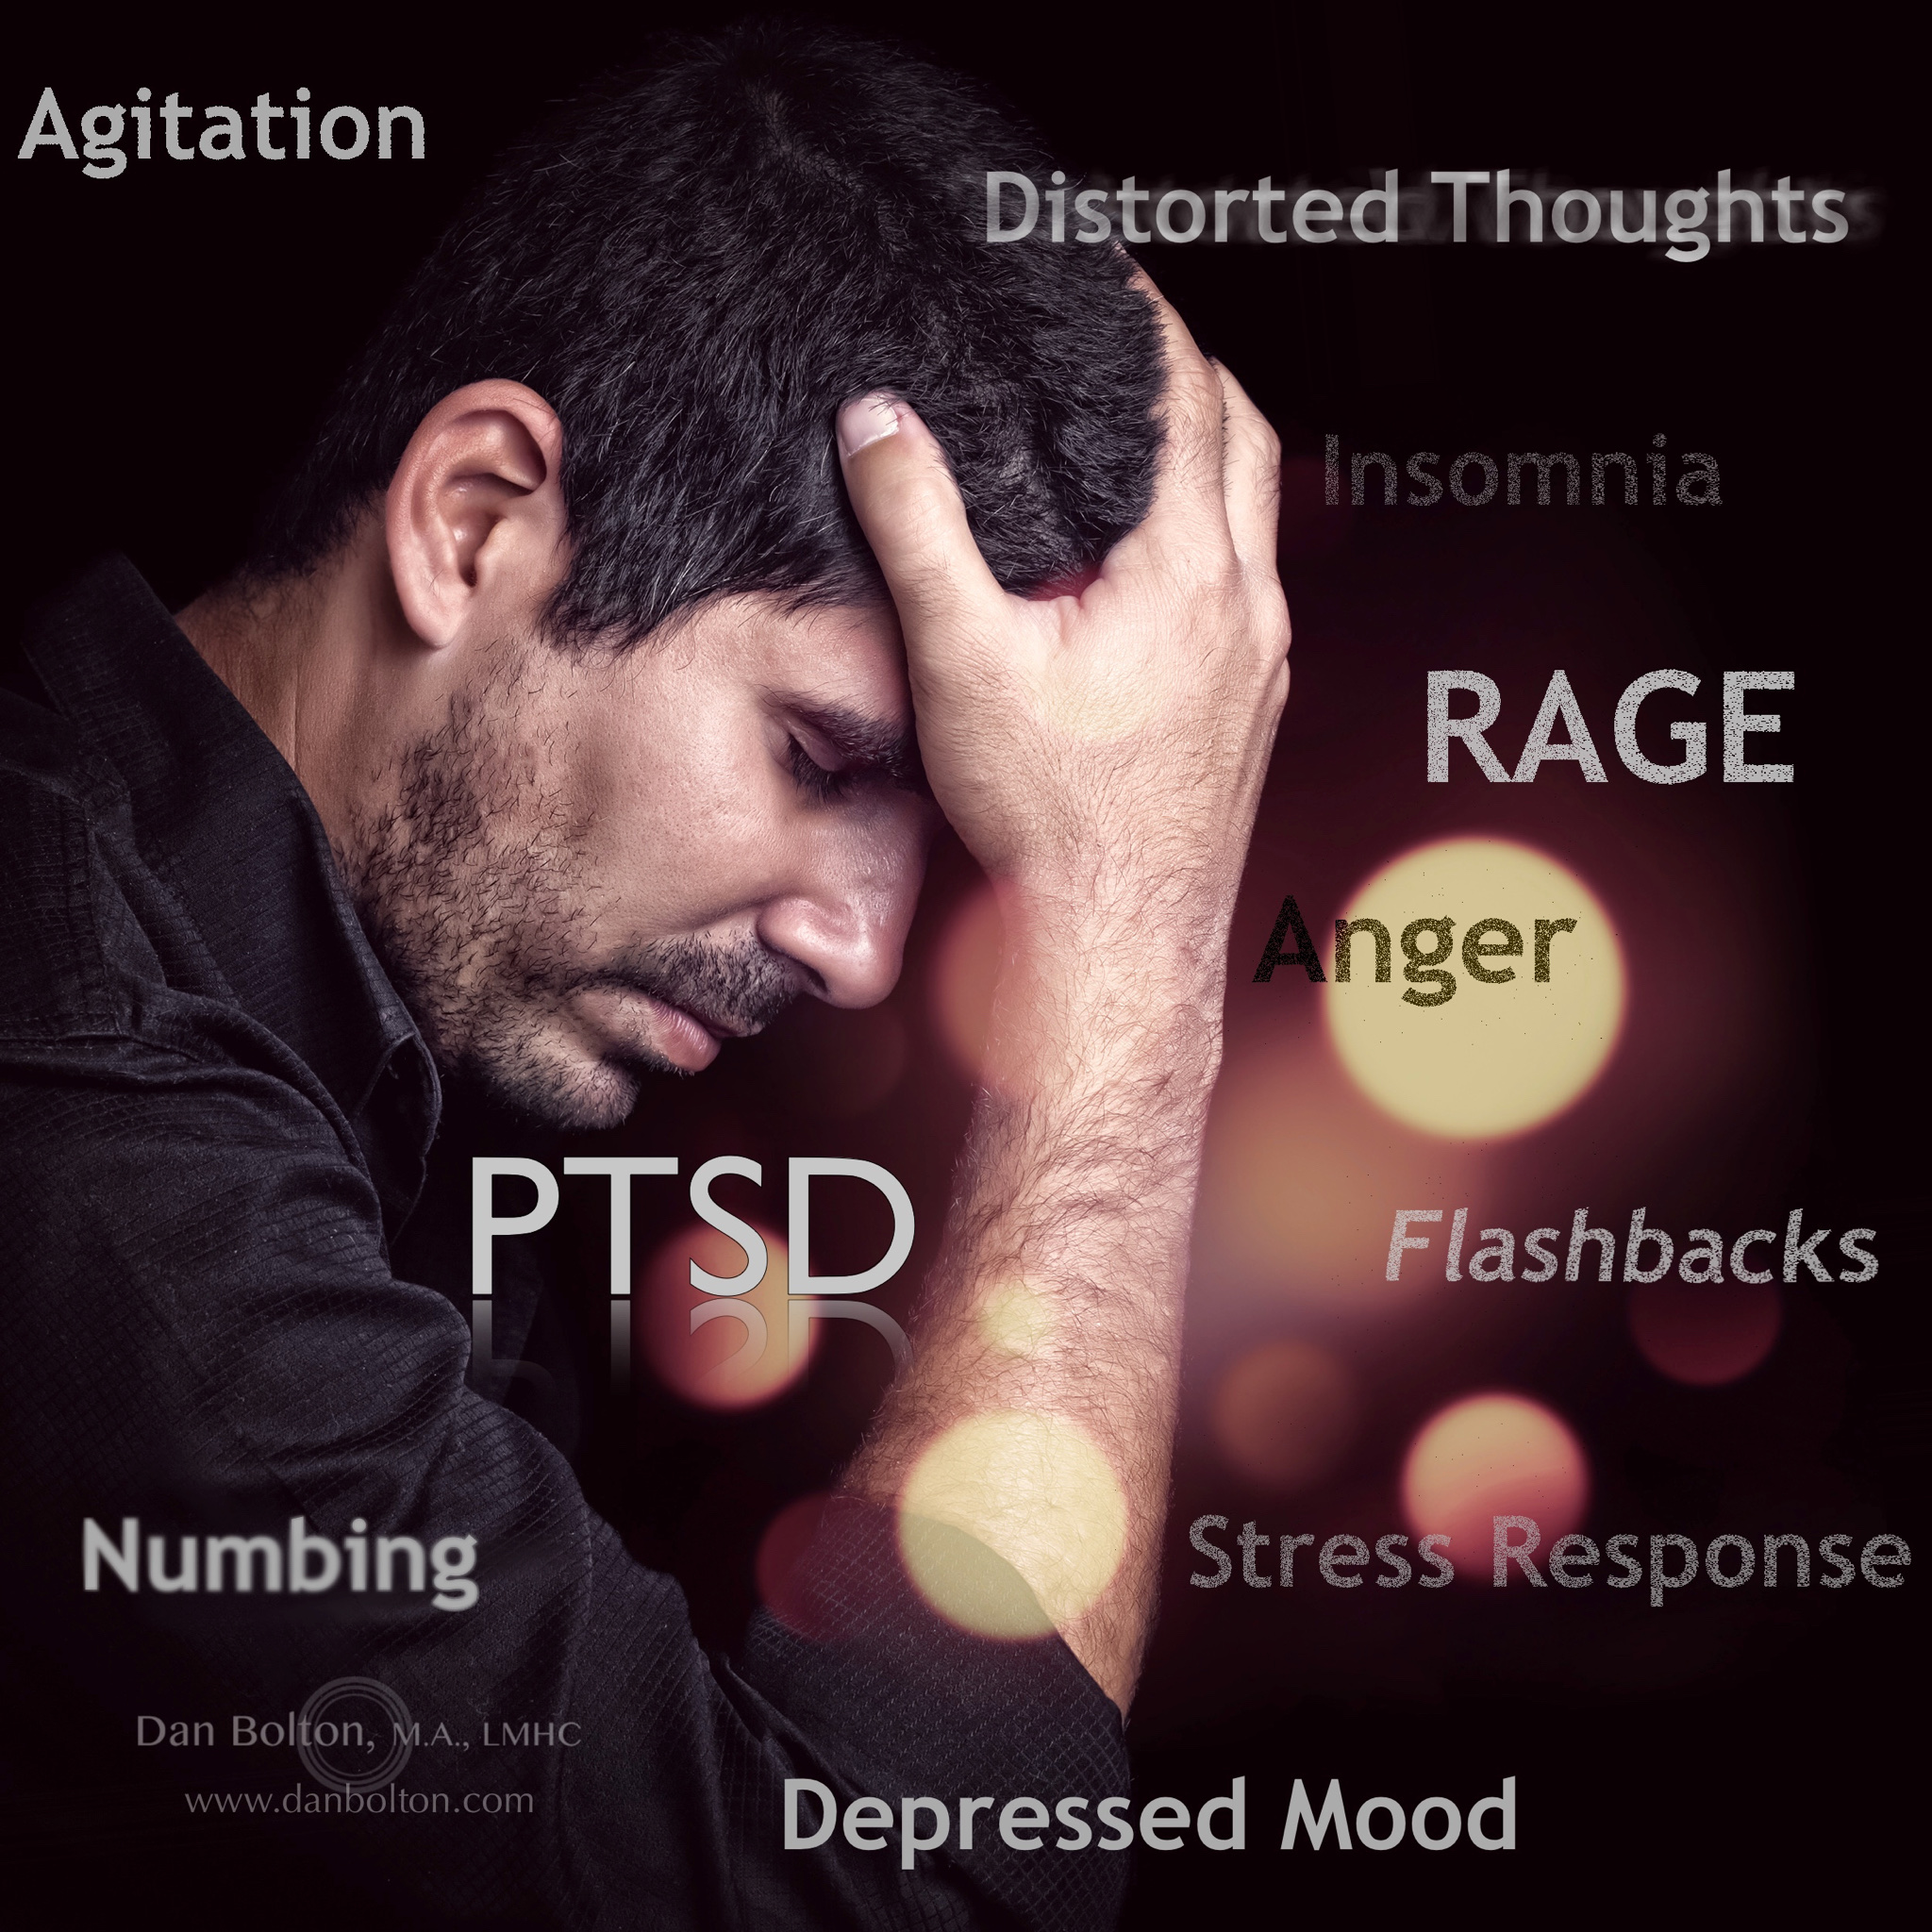 Man suffering from PTSD